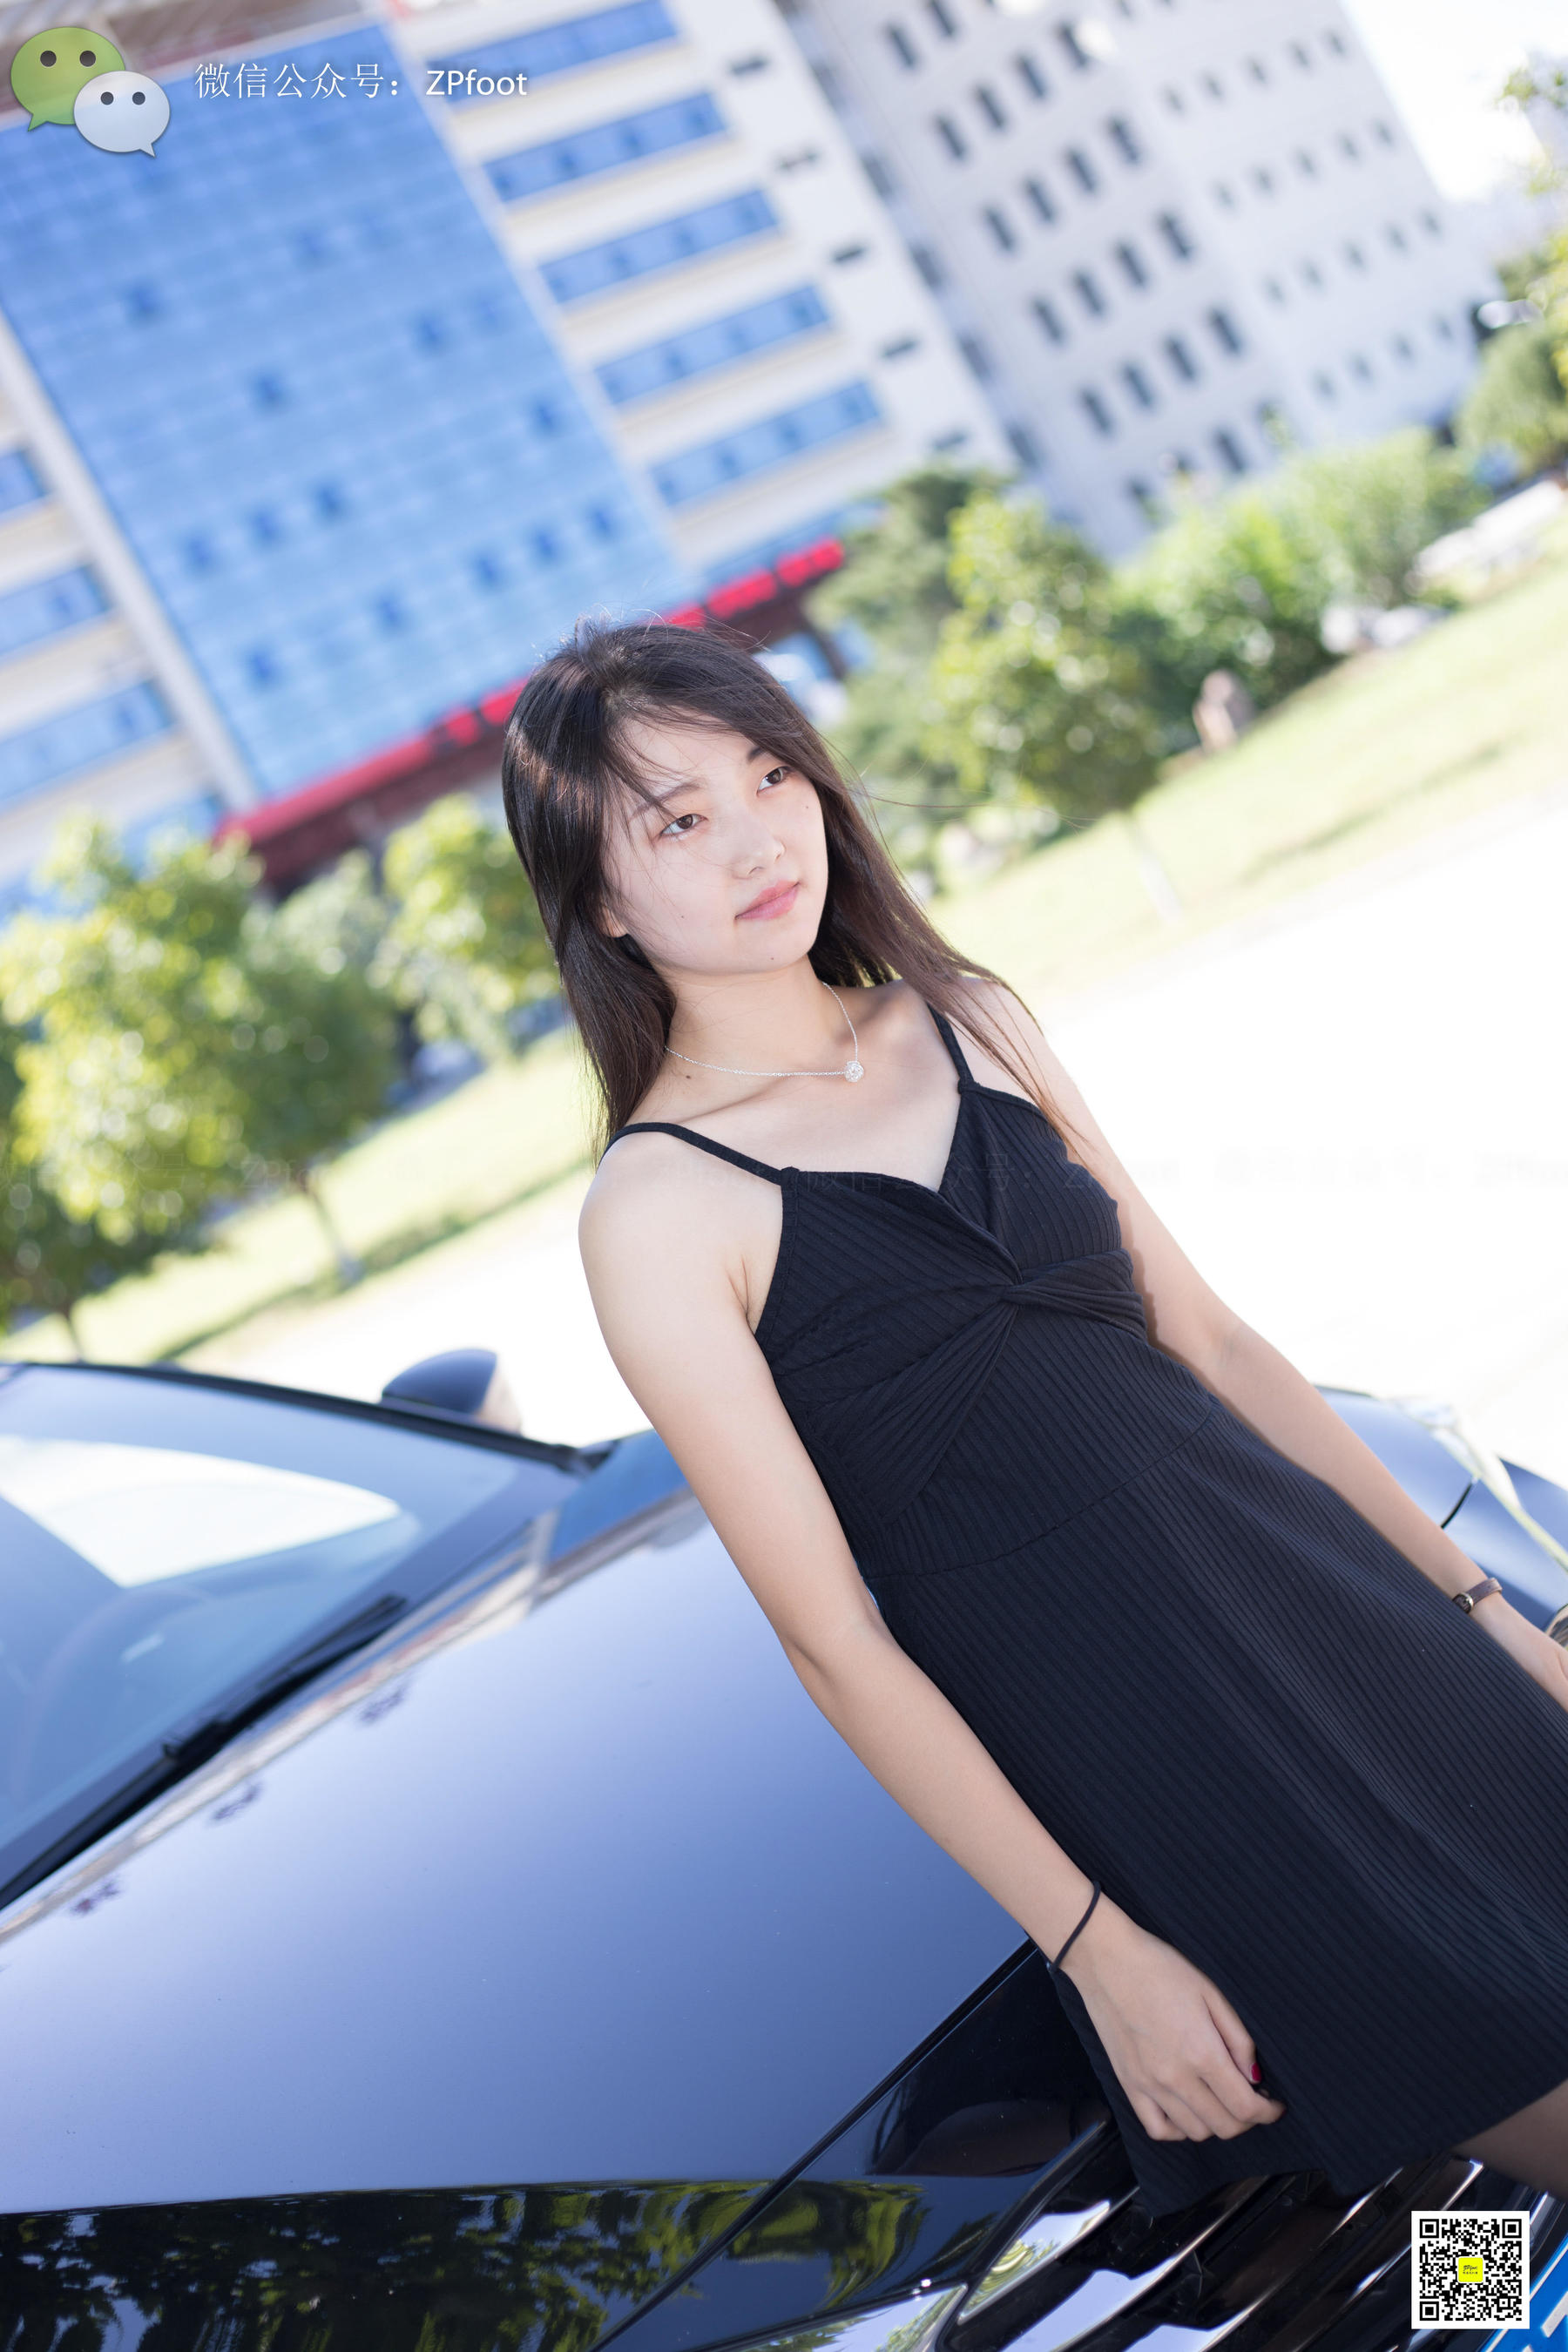 [山 摄 摄 l] no.040 black silk car model photo set